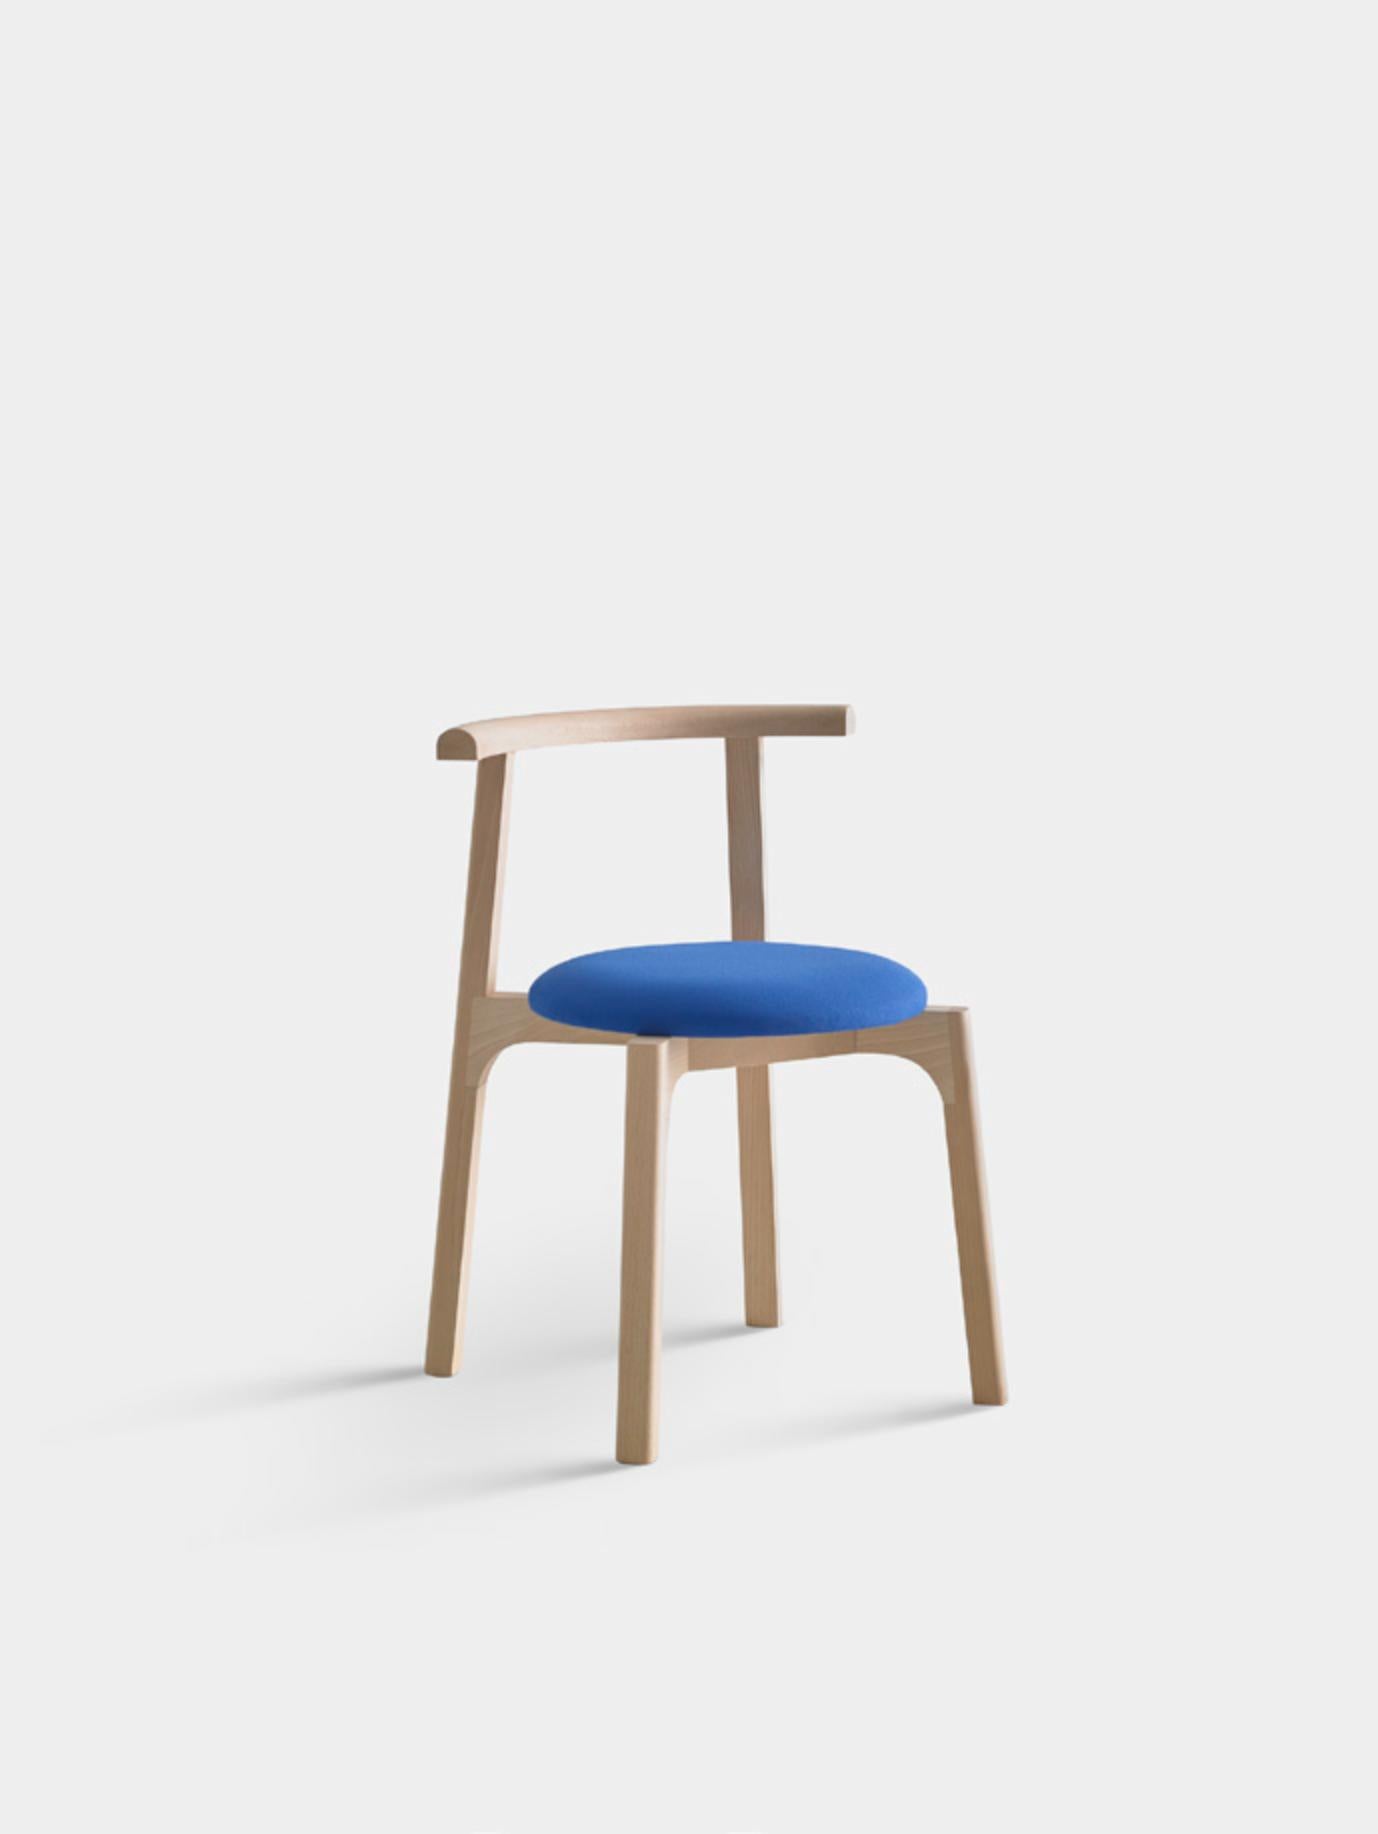 Spanish Set of 4 Carlo Chair by Studioestudio